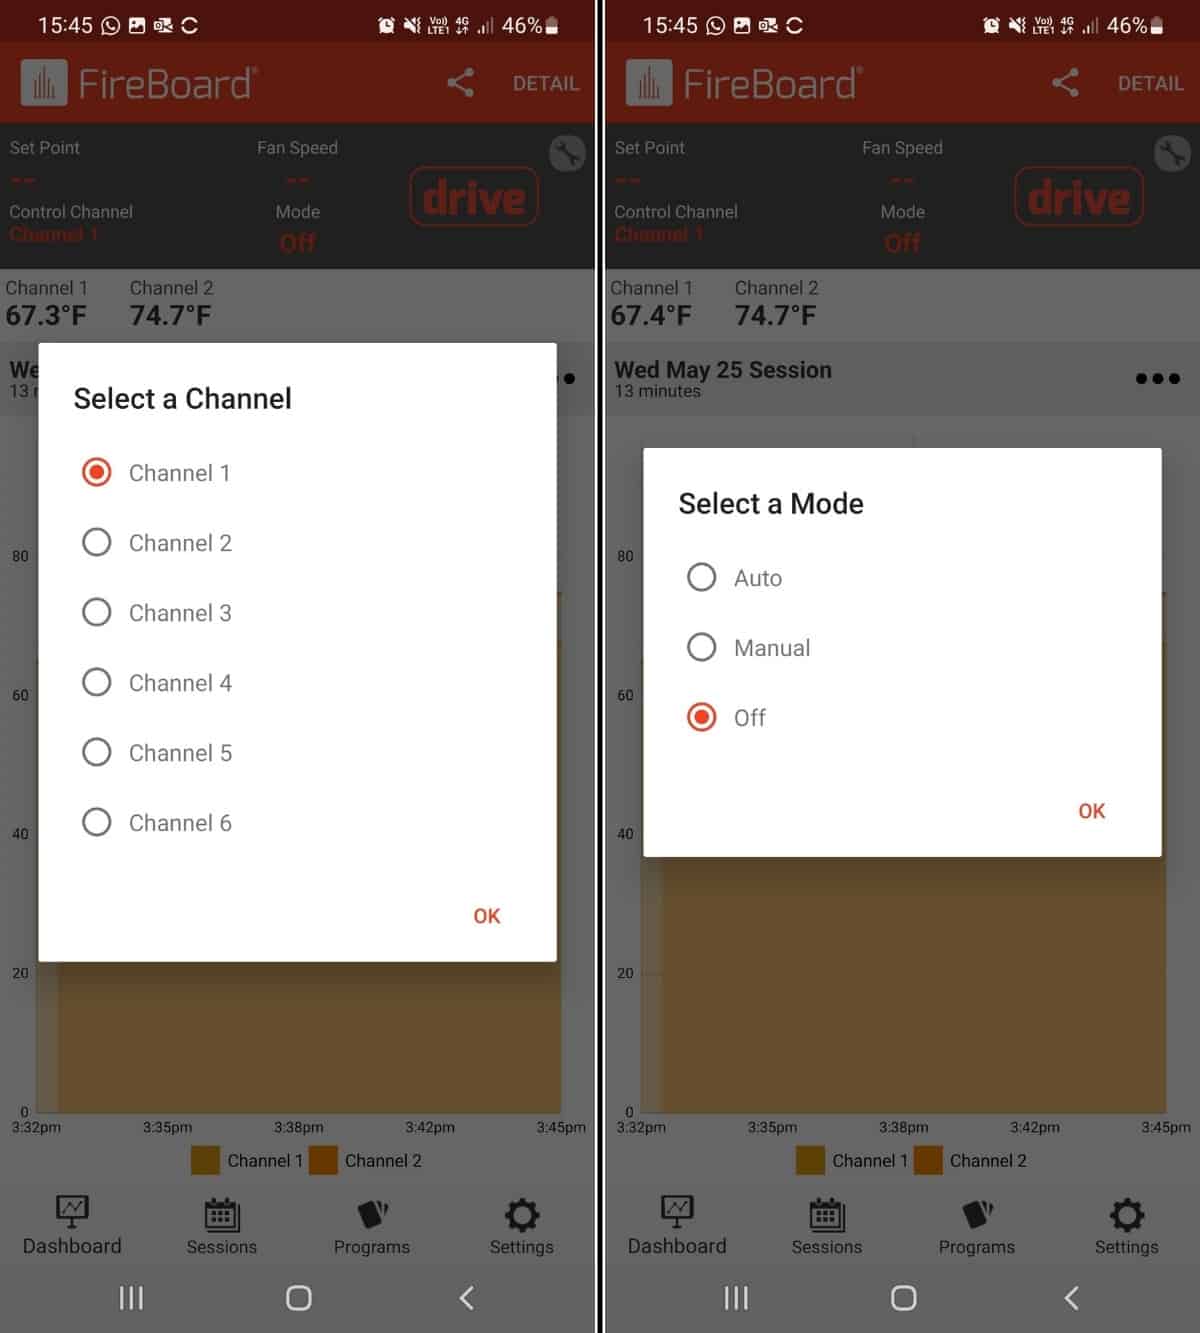 FireBoard app screenshots showing how to set up a target temperature.